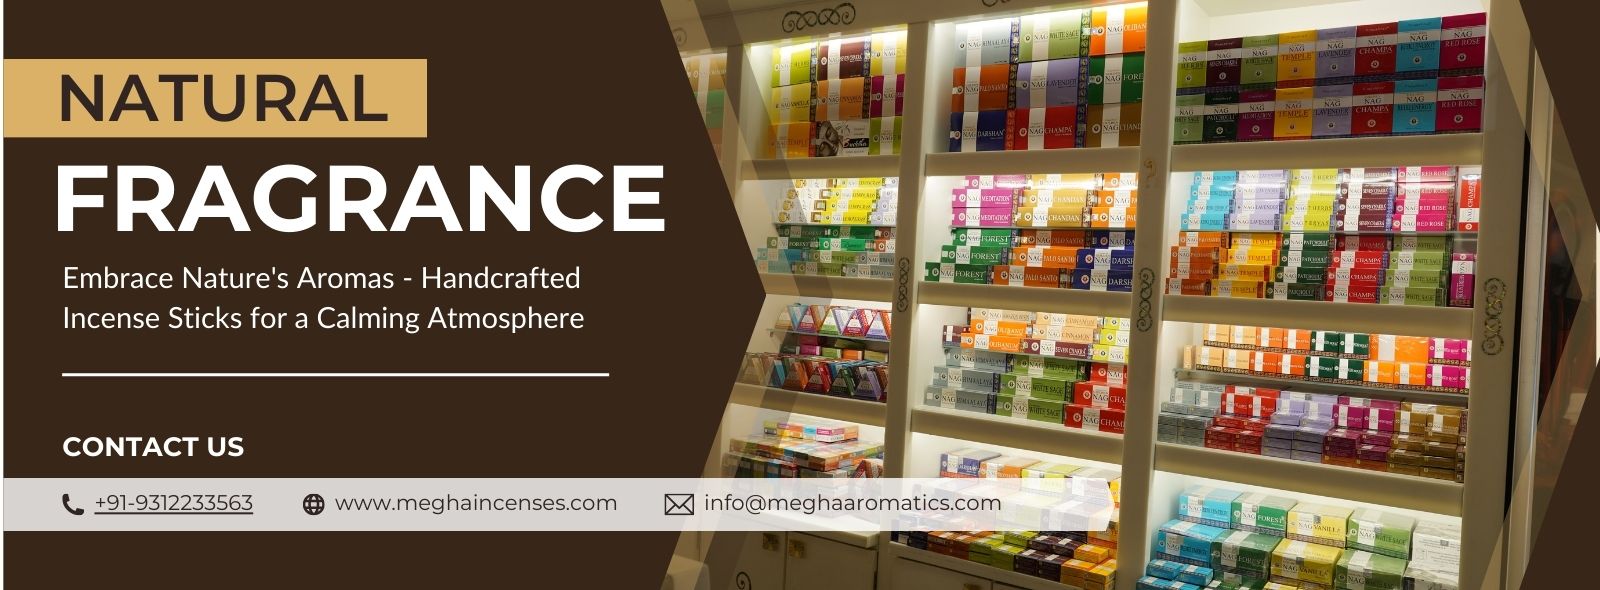 Natural Fragrance Incense Sticks Exporter in India